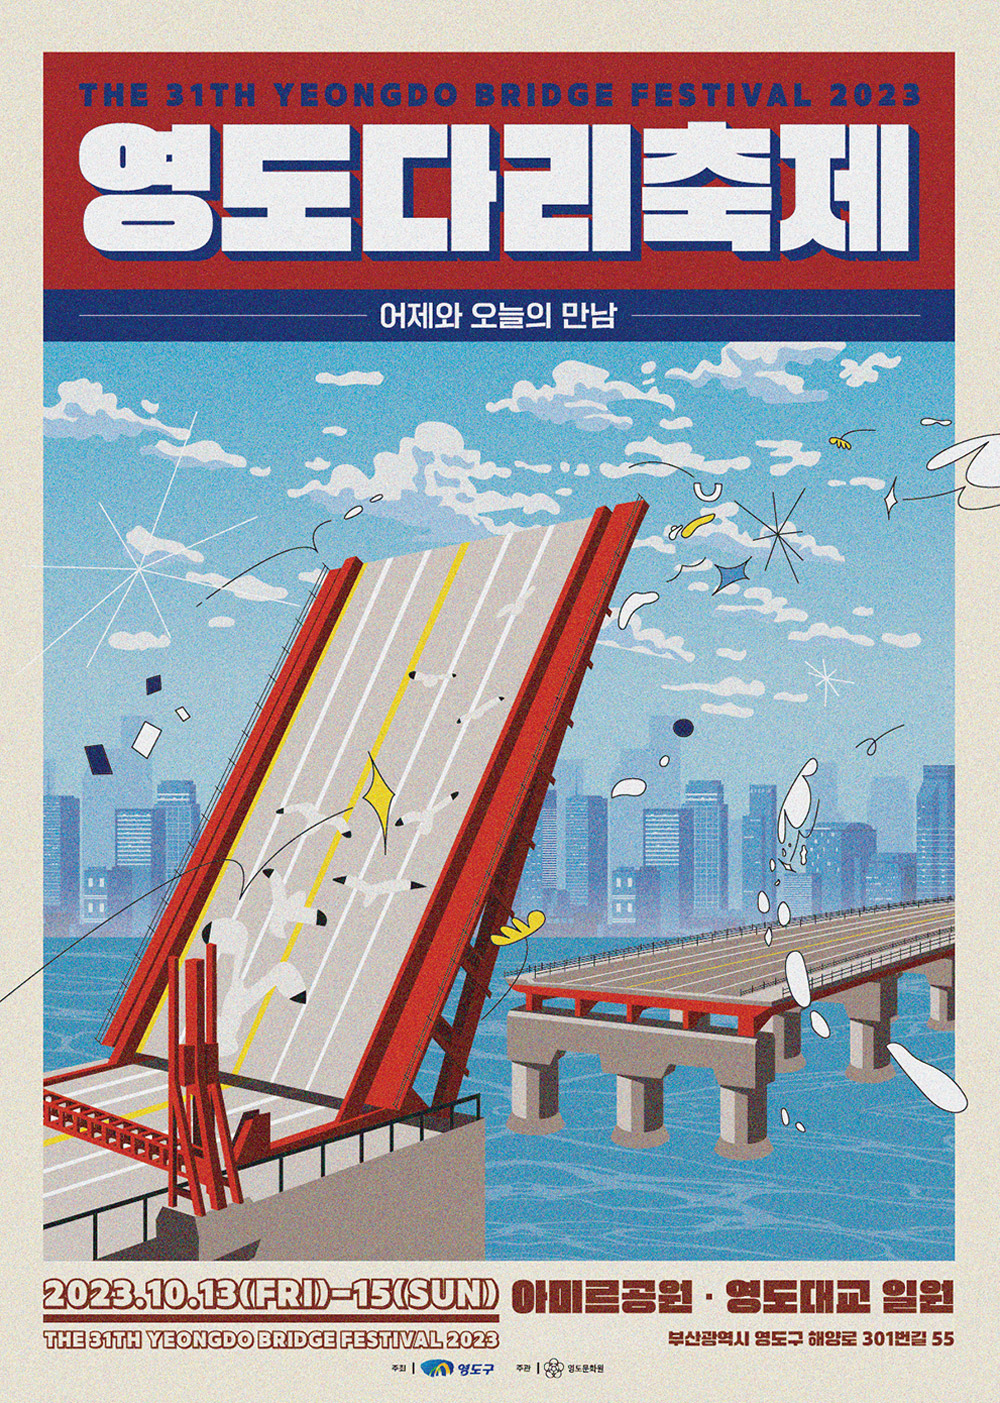 The 31th YeongDo Bridge Festical 2023